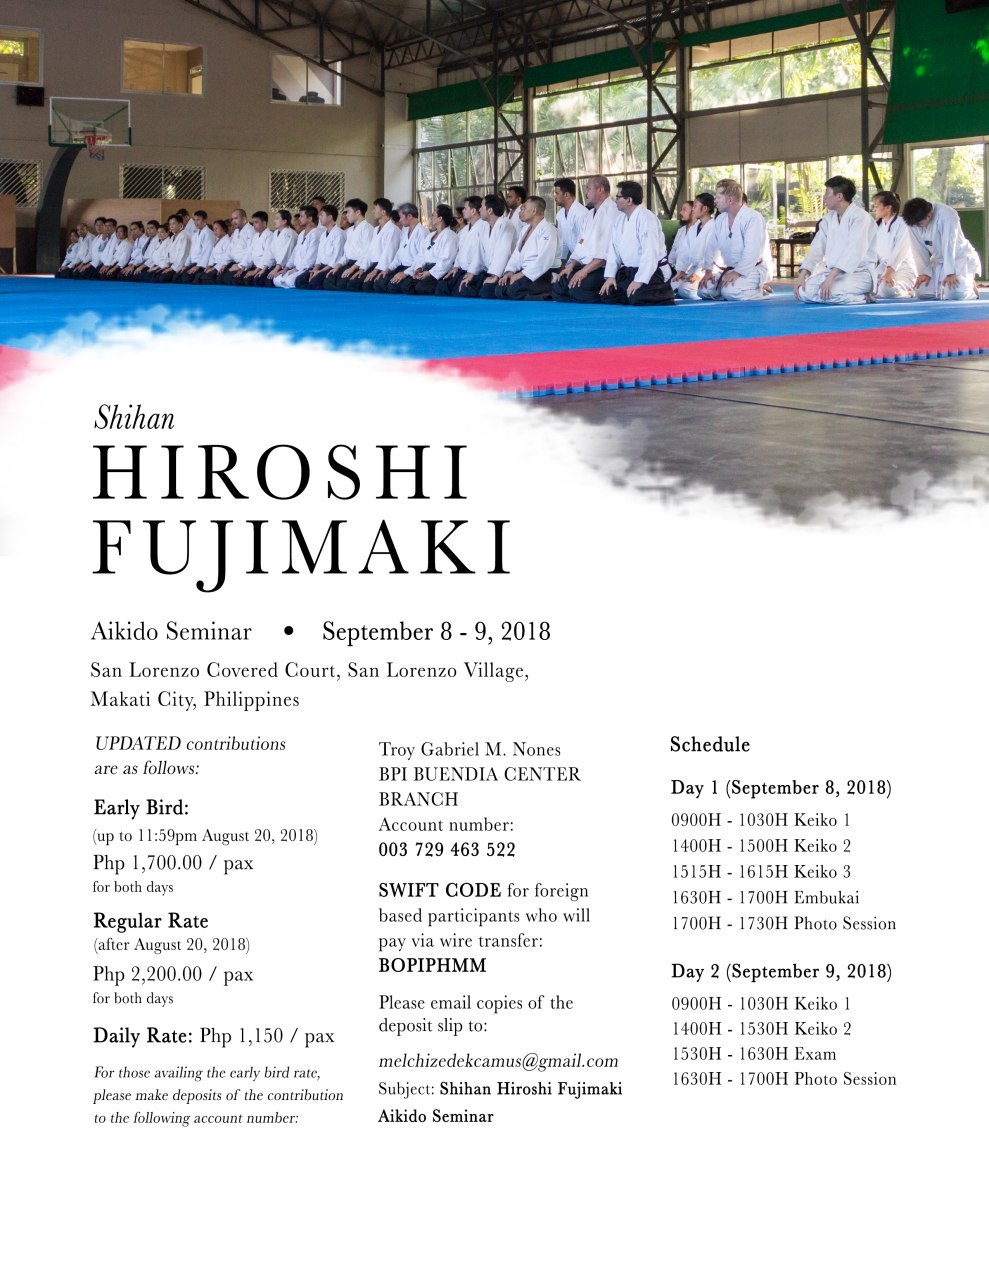 HiroshiFujimakiShihan-2018Seminar